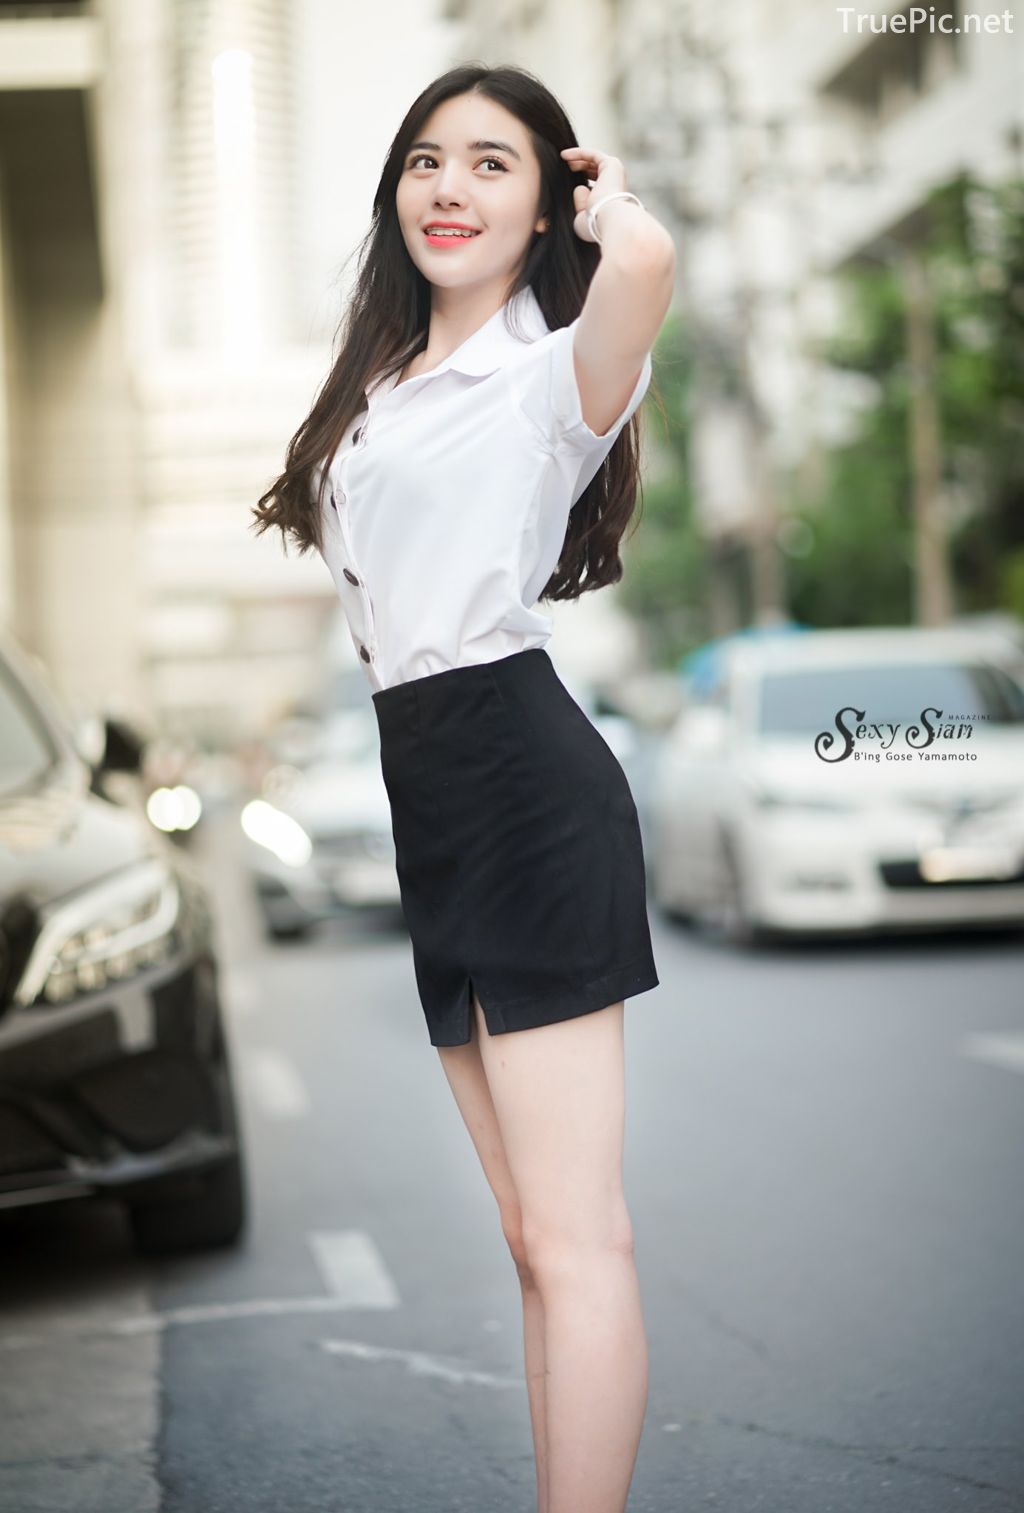 Thailand beautiful girl - Chonticha Chalimewong - Thai Girl Student uniform - TruePic.net - Picture 28